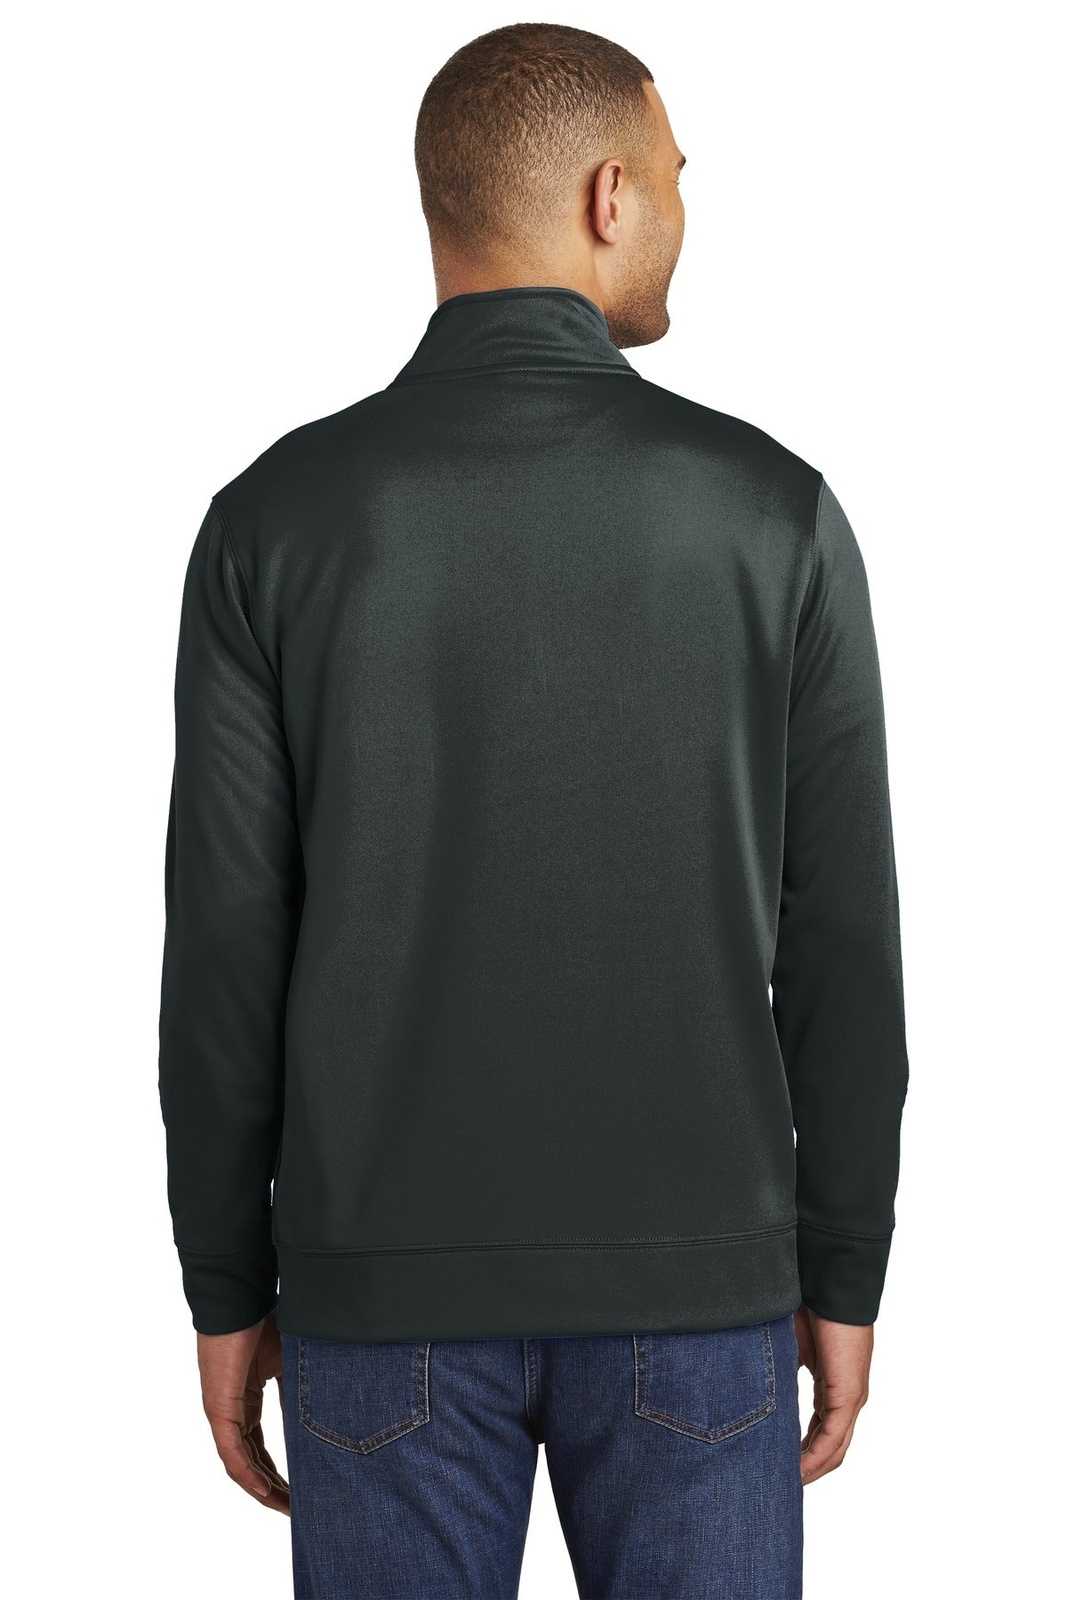 Port &amp; Company PC590Q Fleece 1/4-Zip Pullover Sweatshirt - Jet Black - HIT a Double - 2